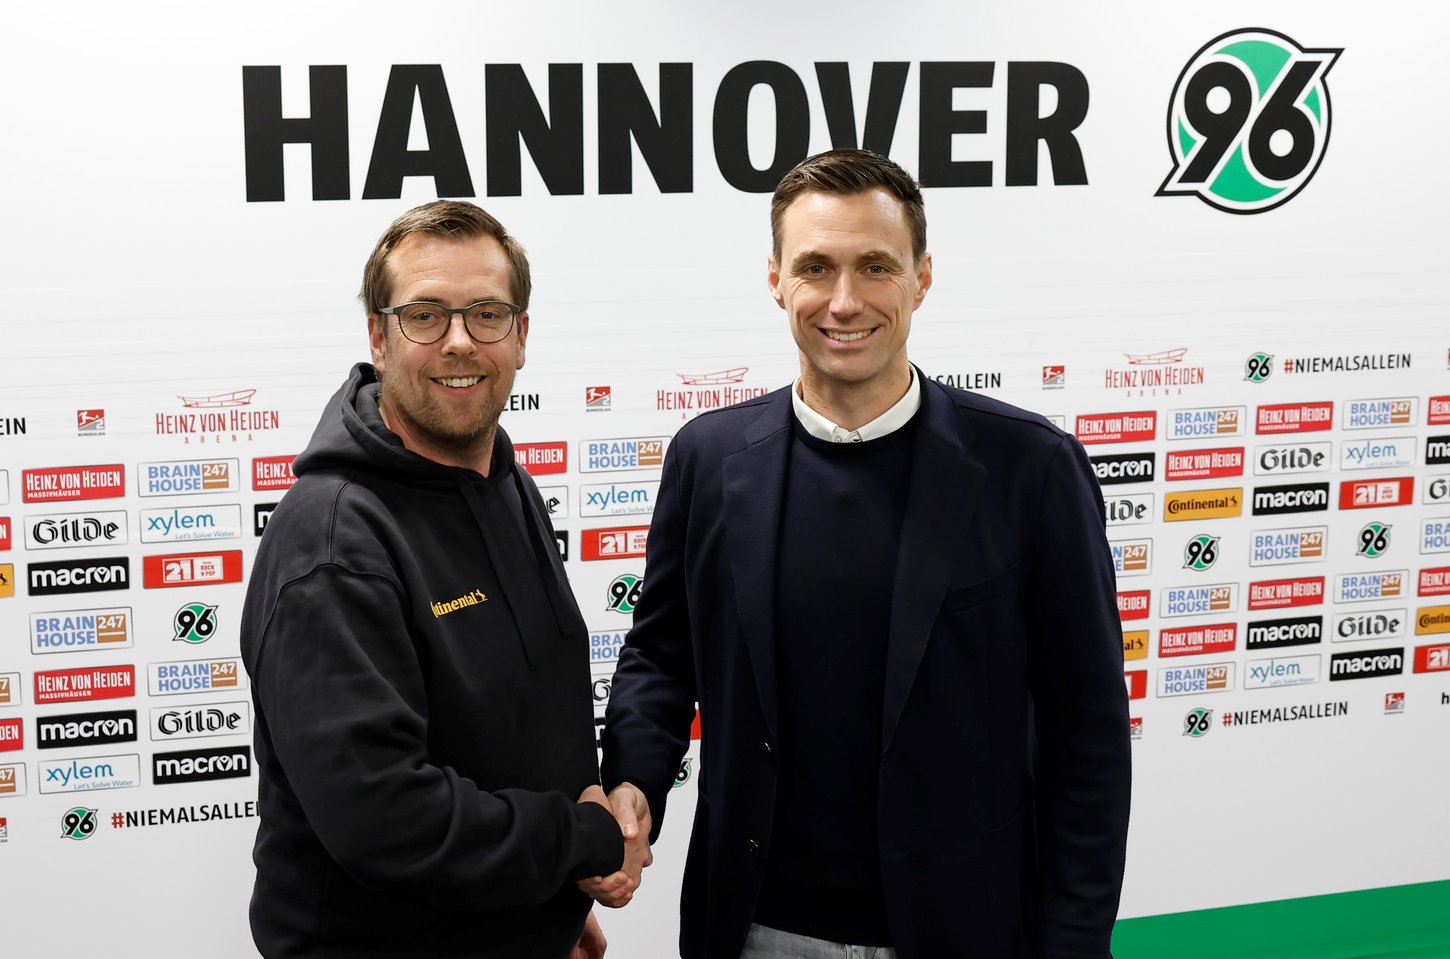 Conti- Hannover 96- partnership